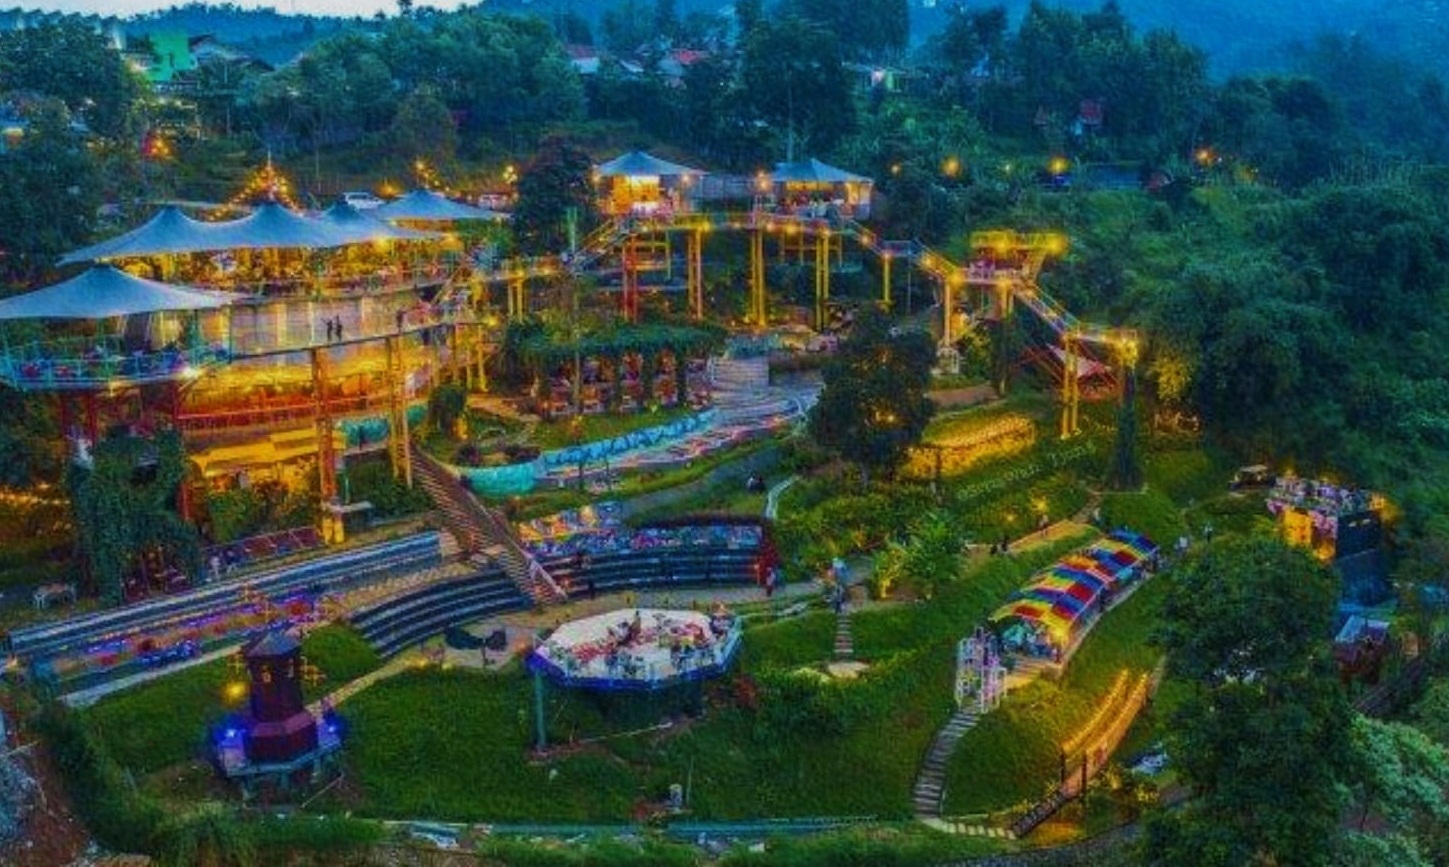 Update Harga Tiket Masuk ke D’Dieuland, Bandung, Tempat Wisata Mirip Disneyland!